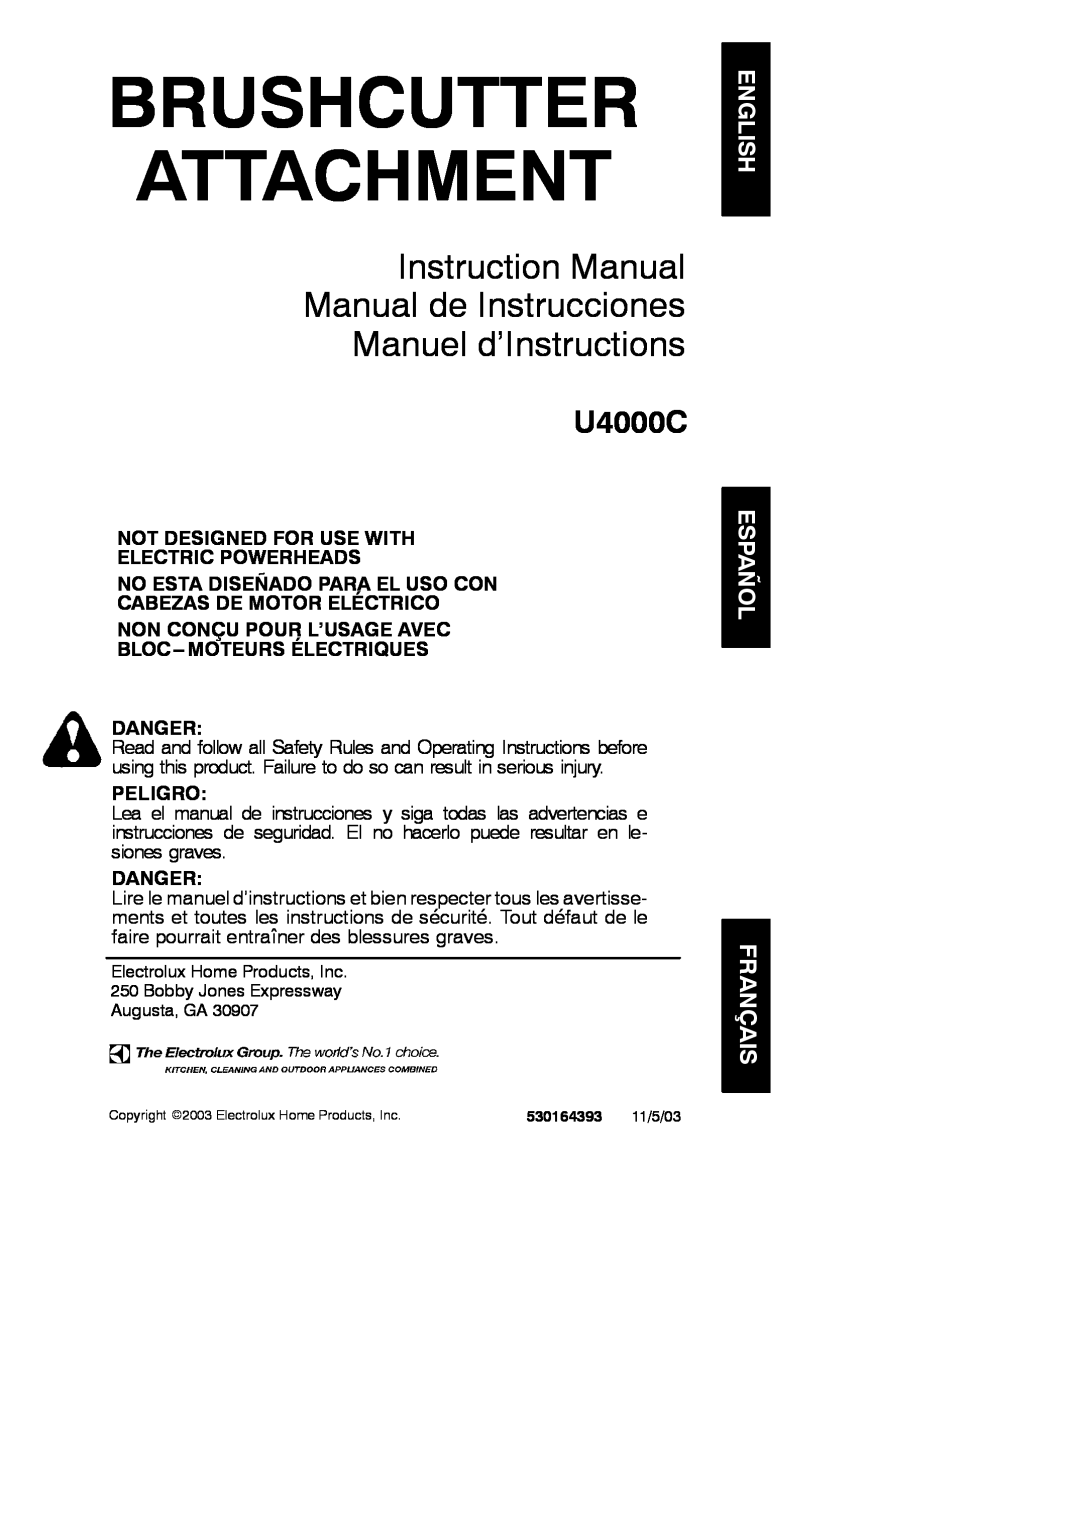 Poulan U4000C instruction manual Danger, Peligro, Brushcutter Attachment, Manuel d’Instructions, English, Español Français 